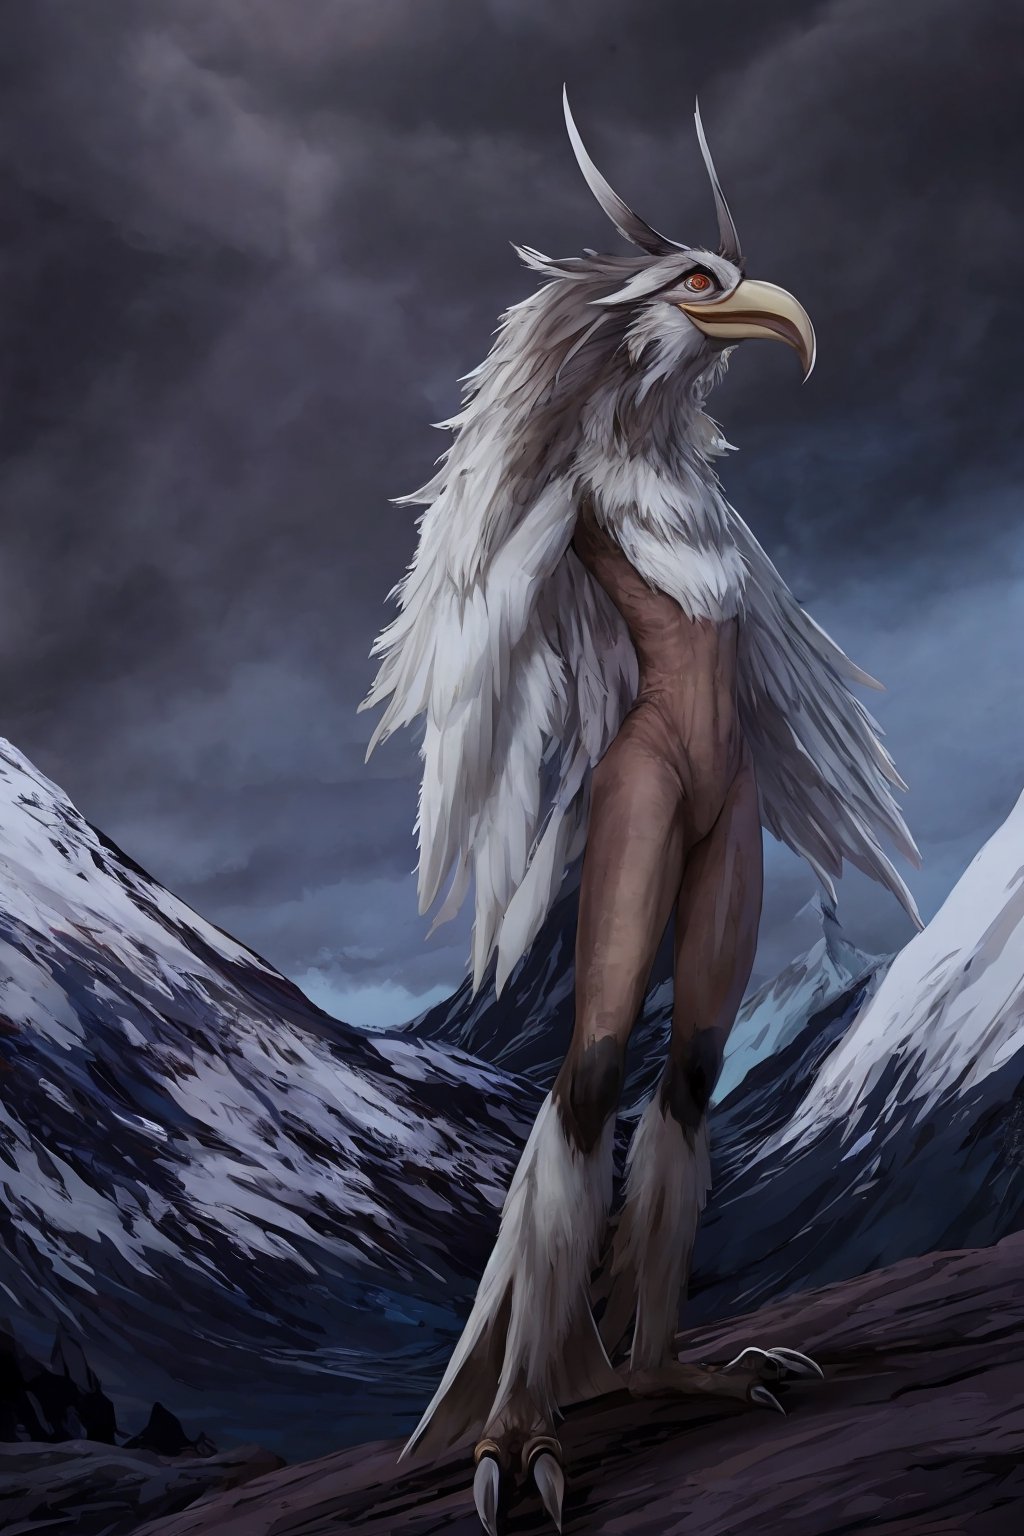 EPIC, Opium bird, standing, feathers, white feathers, bird, birdman, humanoid, bird head, with extremely long beak, long beak, long mouth, full body, bird legs, bird arms, sinister, terrifying, beautiful , ragged, wide body, fat

High quality, HD, 4kHD, cinematic, atmospheric, realistic, ultra-realistic
snow, mountain, cloudy, gray sky, dark clouds
Detail,lora:largebulg1-000012:1,AIDA_NH_humans,Pixel art,lora:largebulg1-000012:1,lora:largebulg1-000012:1